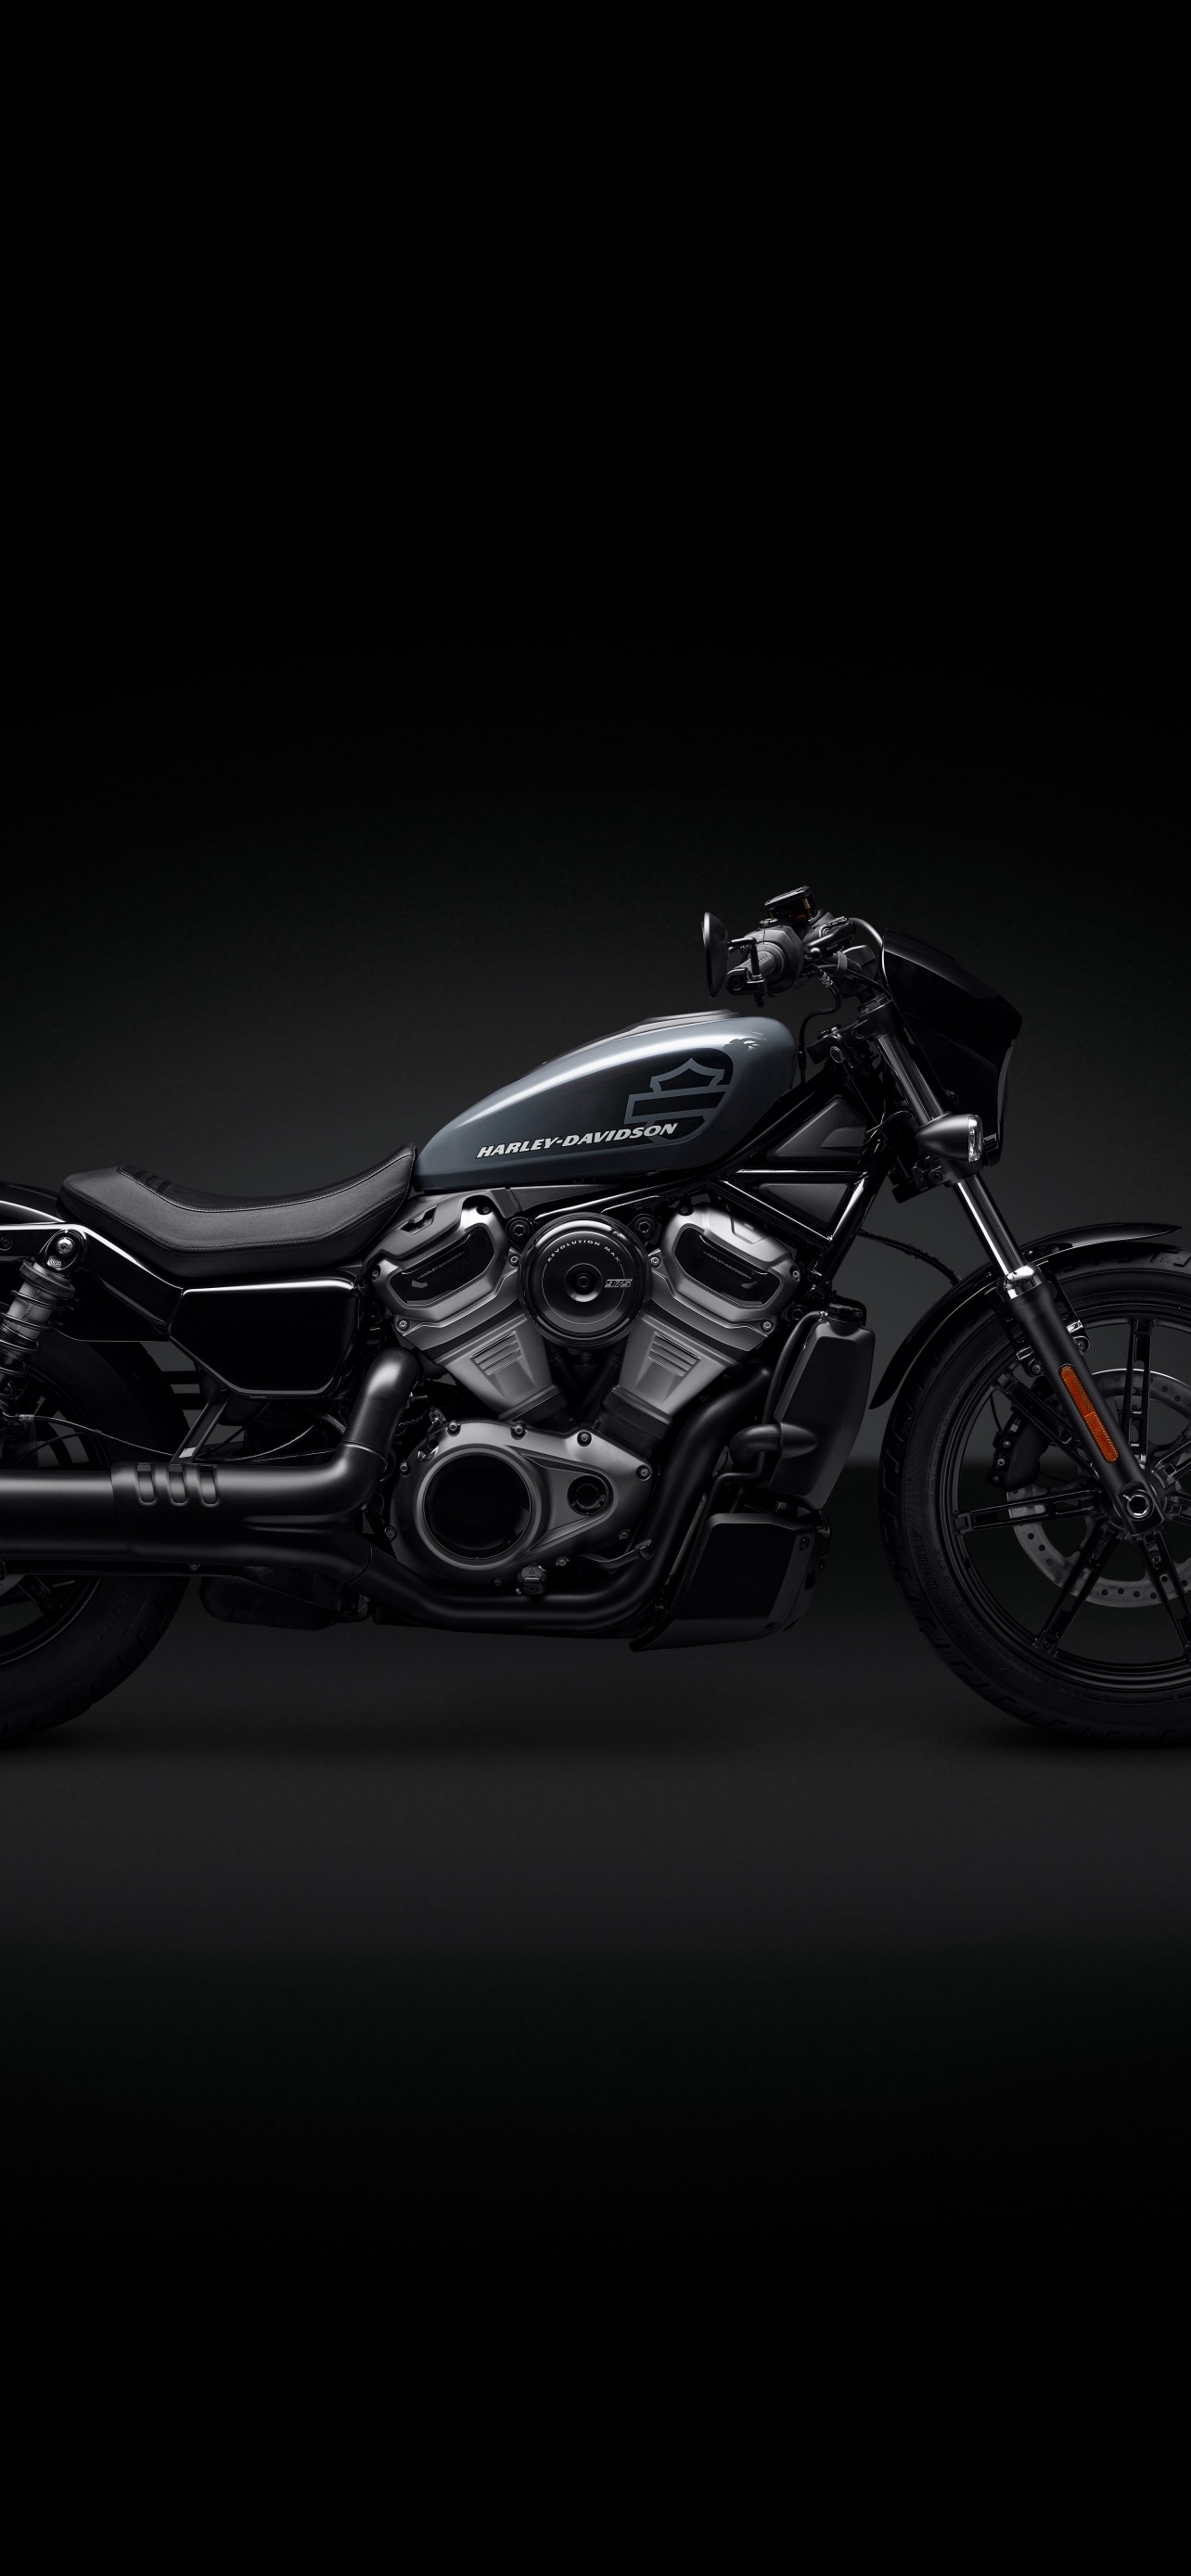 Harley-Davidson Nightster Wallpaper 4K, Cruiser motorcycle, Black/Dark,  #7851